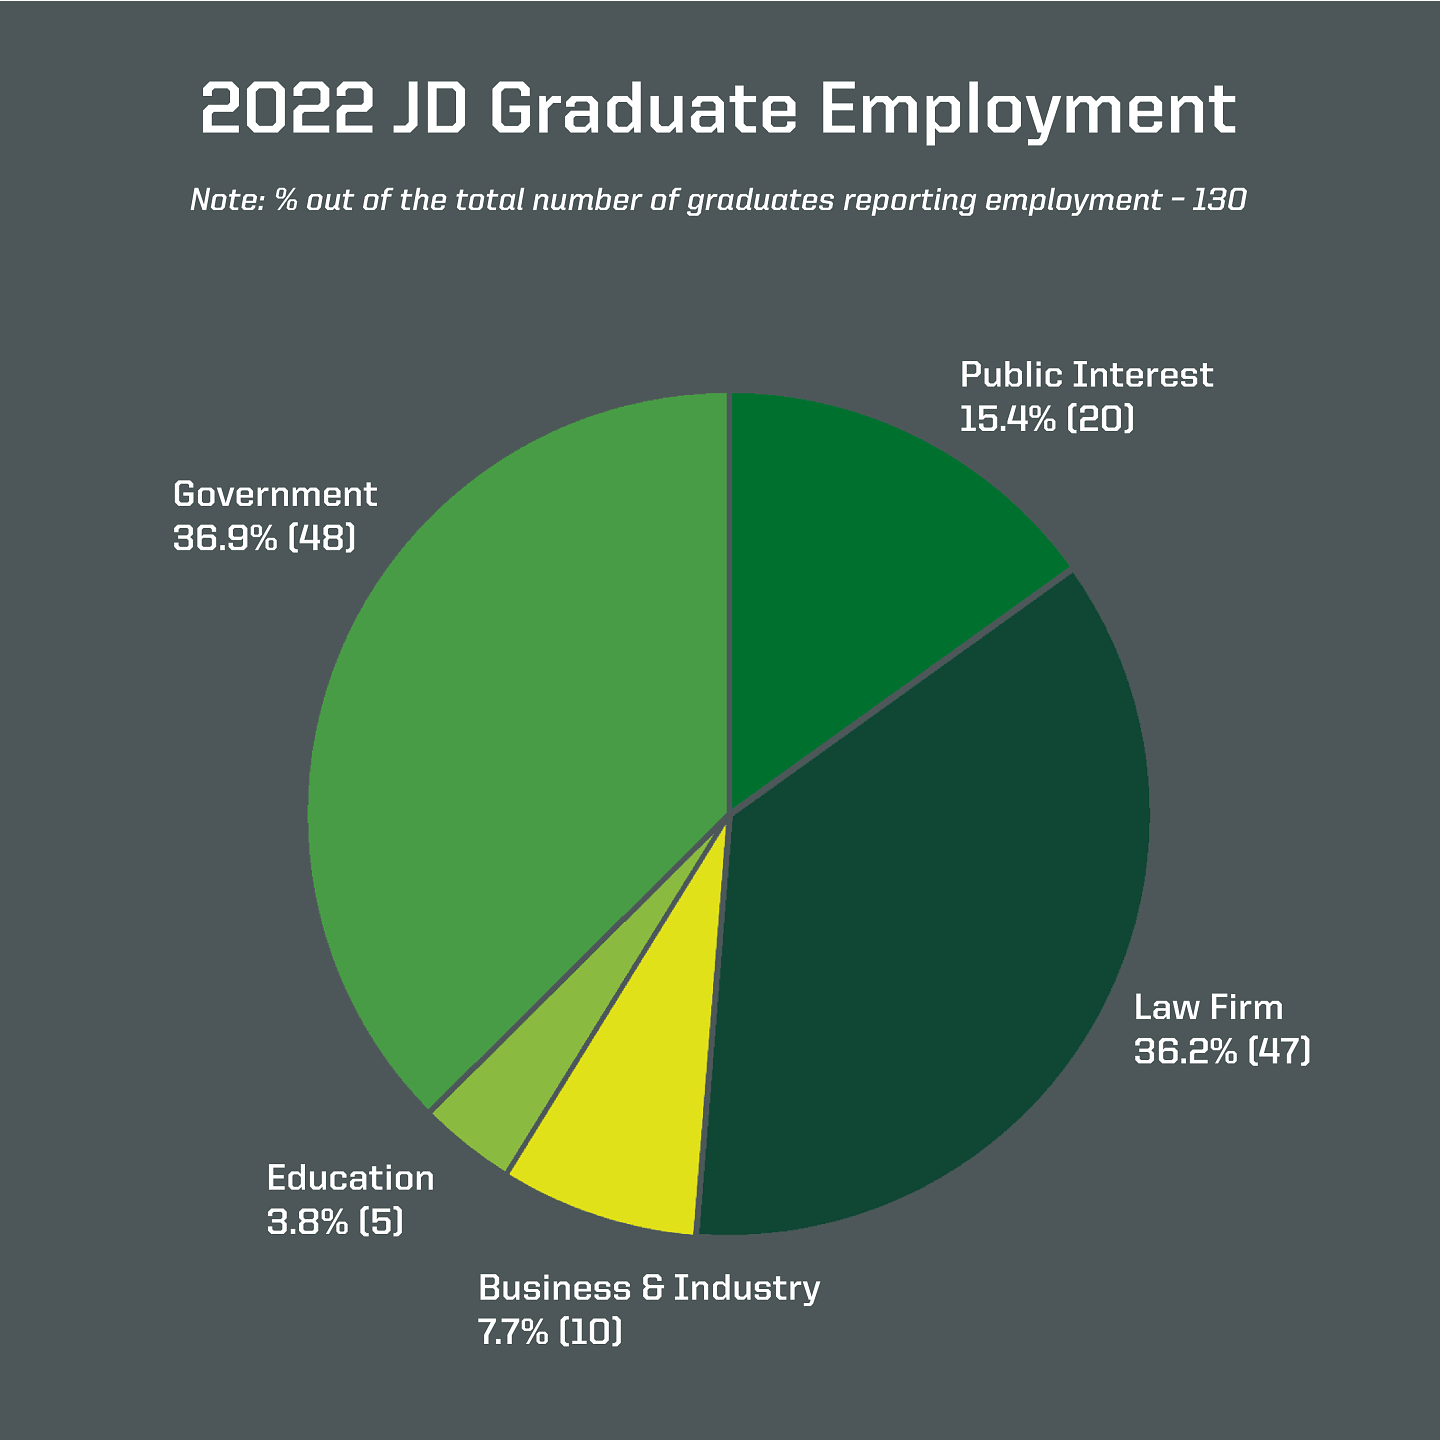 2022 JD Graduate Employment